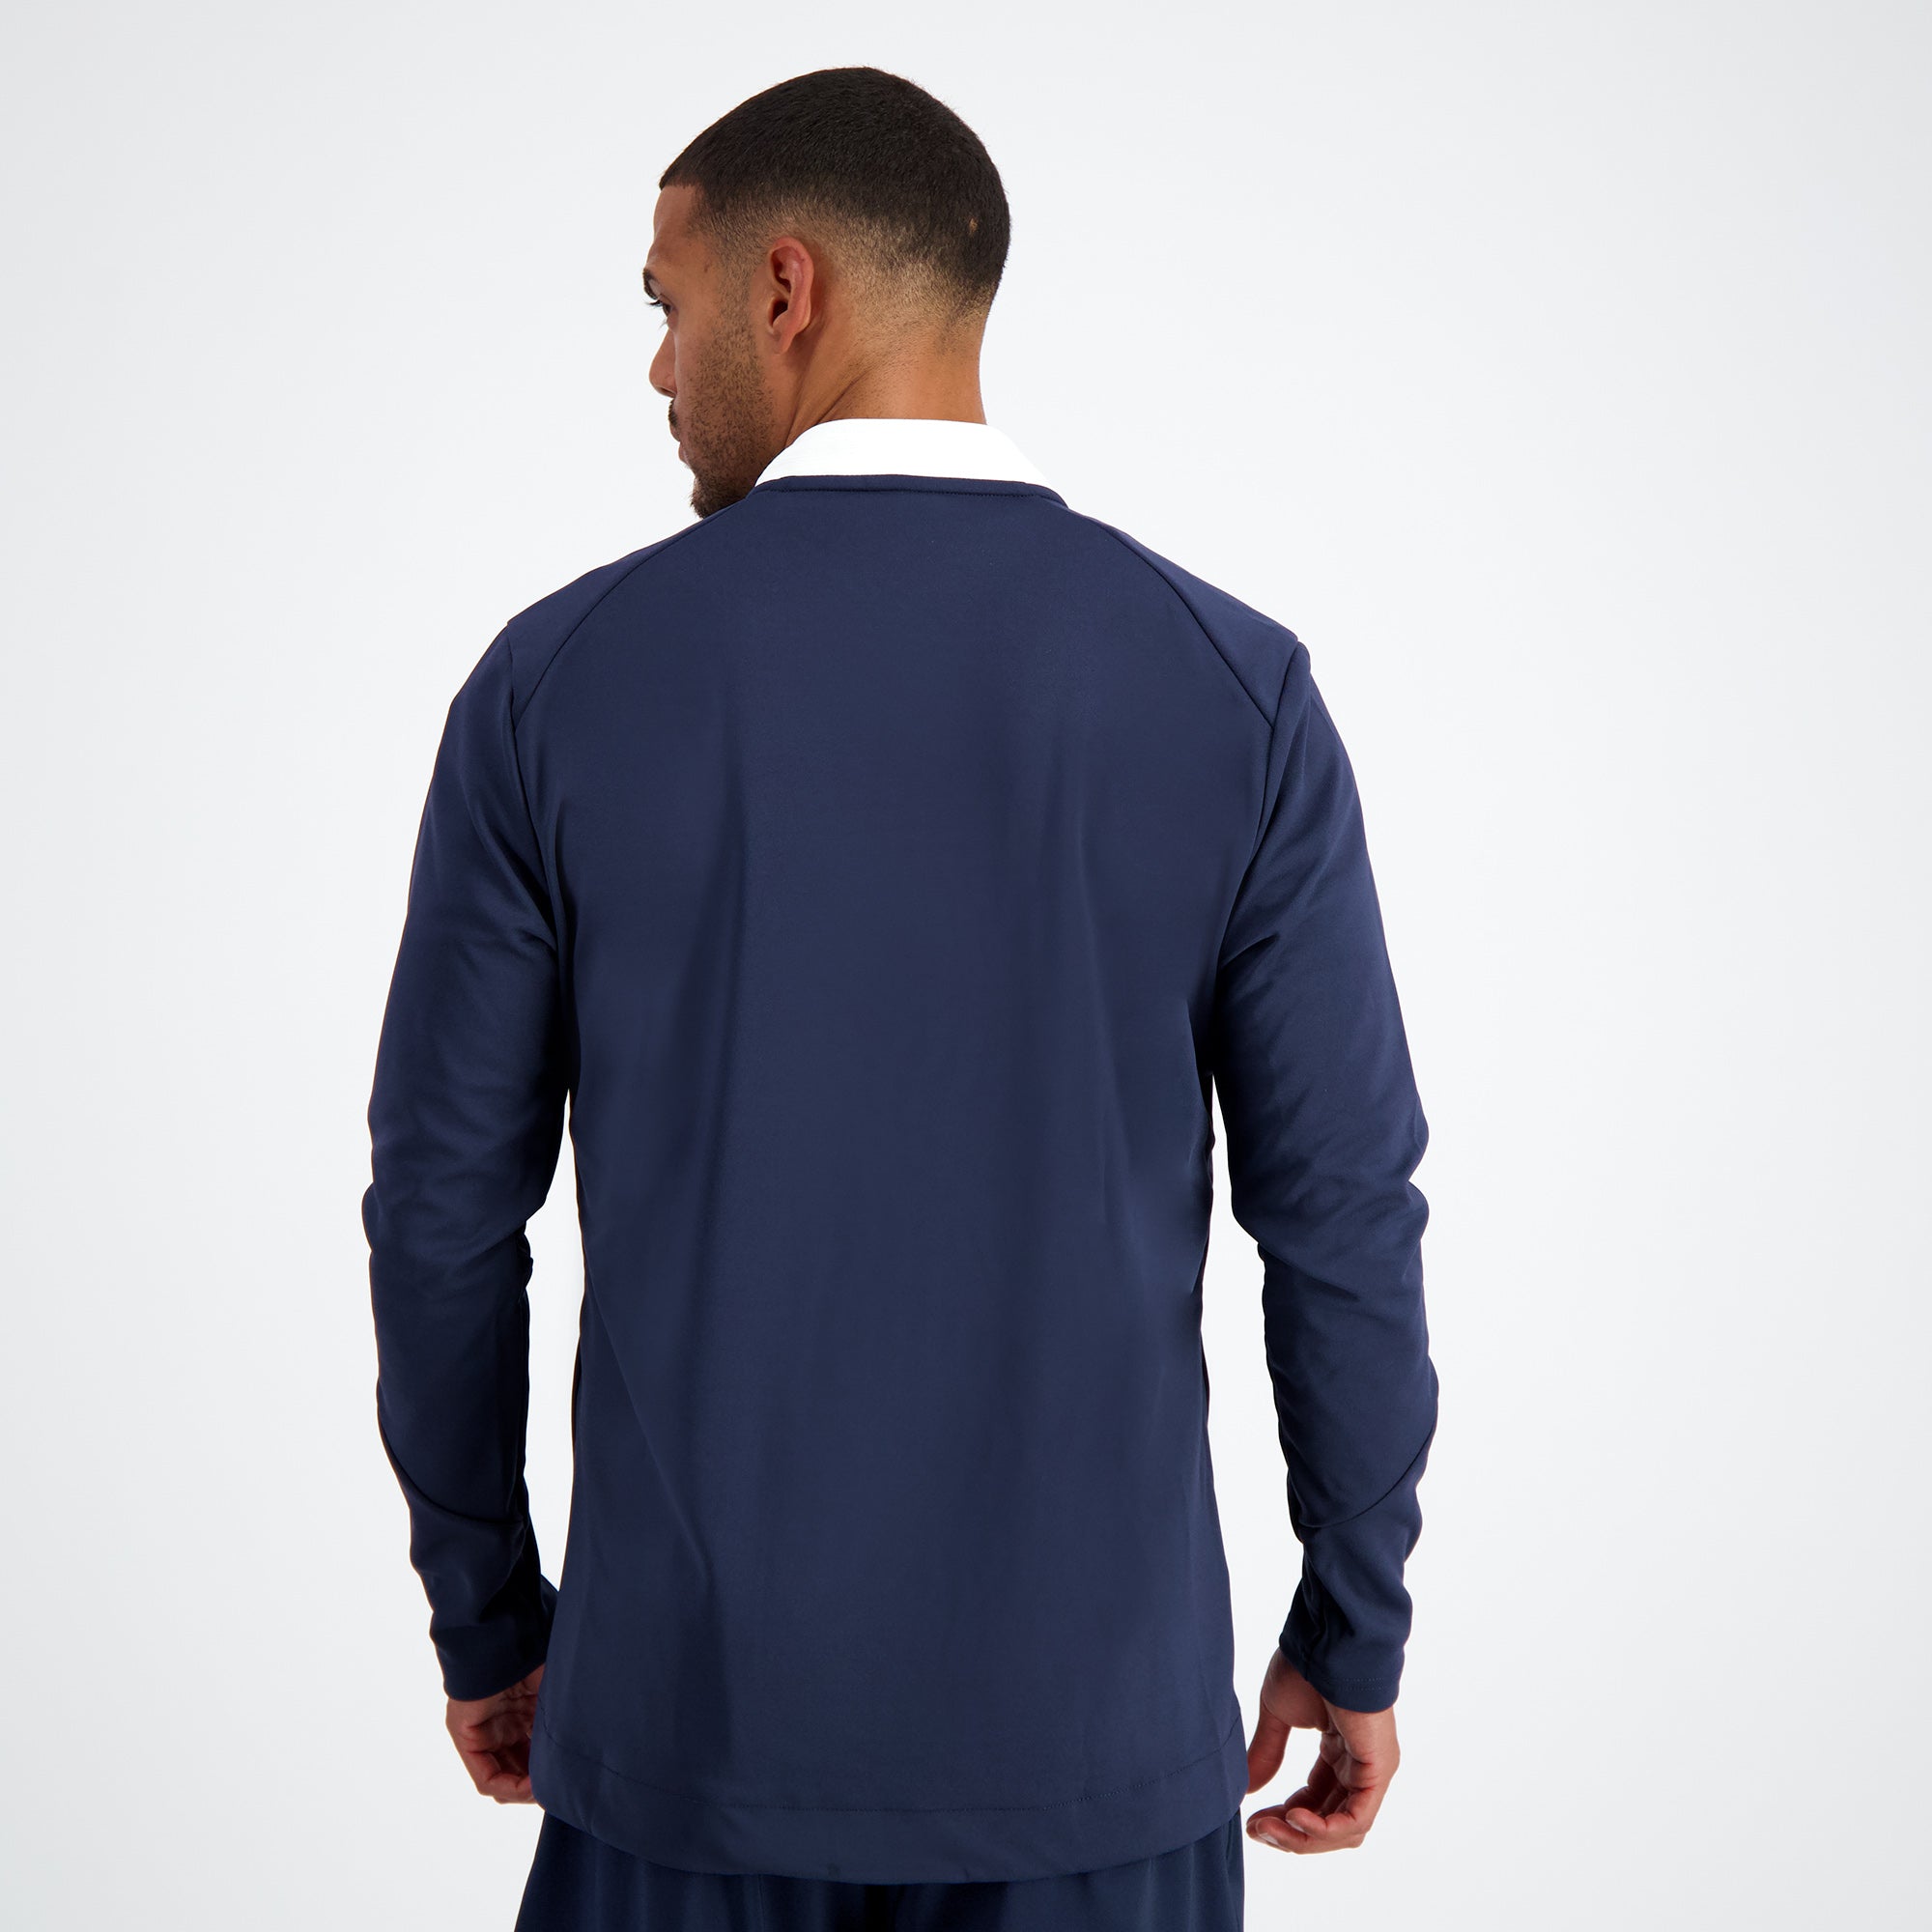 2220032-N°2 TRAINING FZ Sweat M dress blues  | Zip-Up Sweatshirtshirt for men